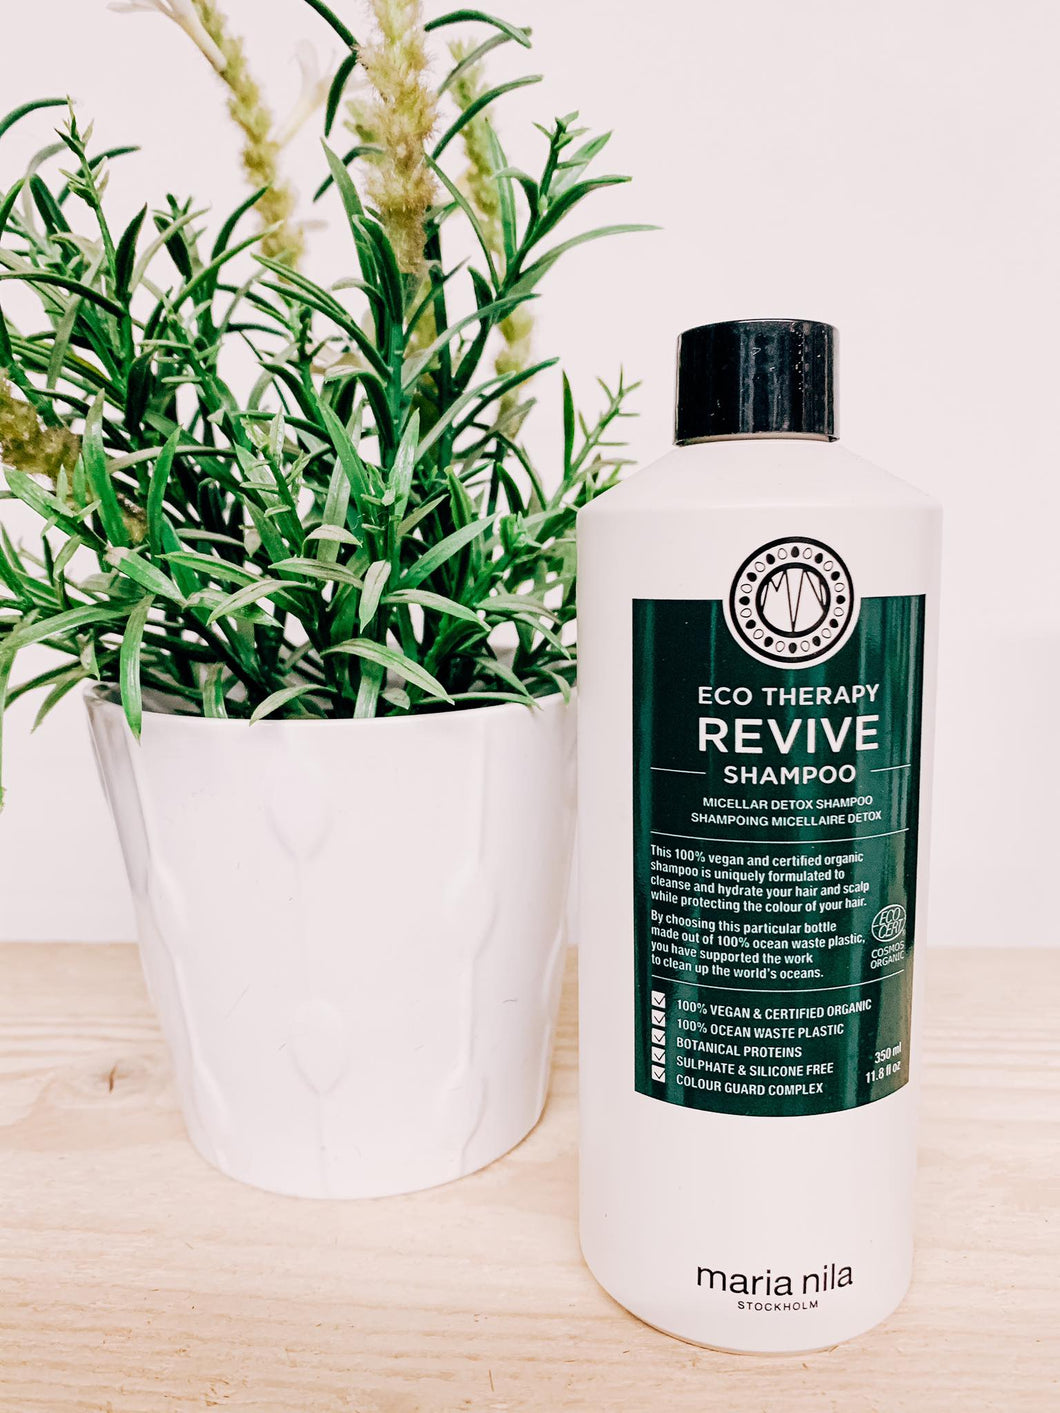 Eco therapy revive shampoo